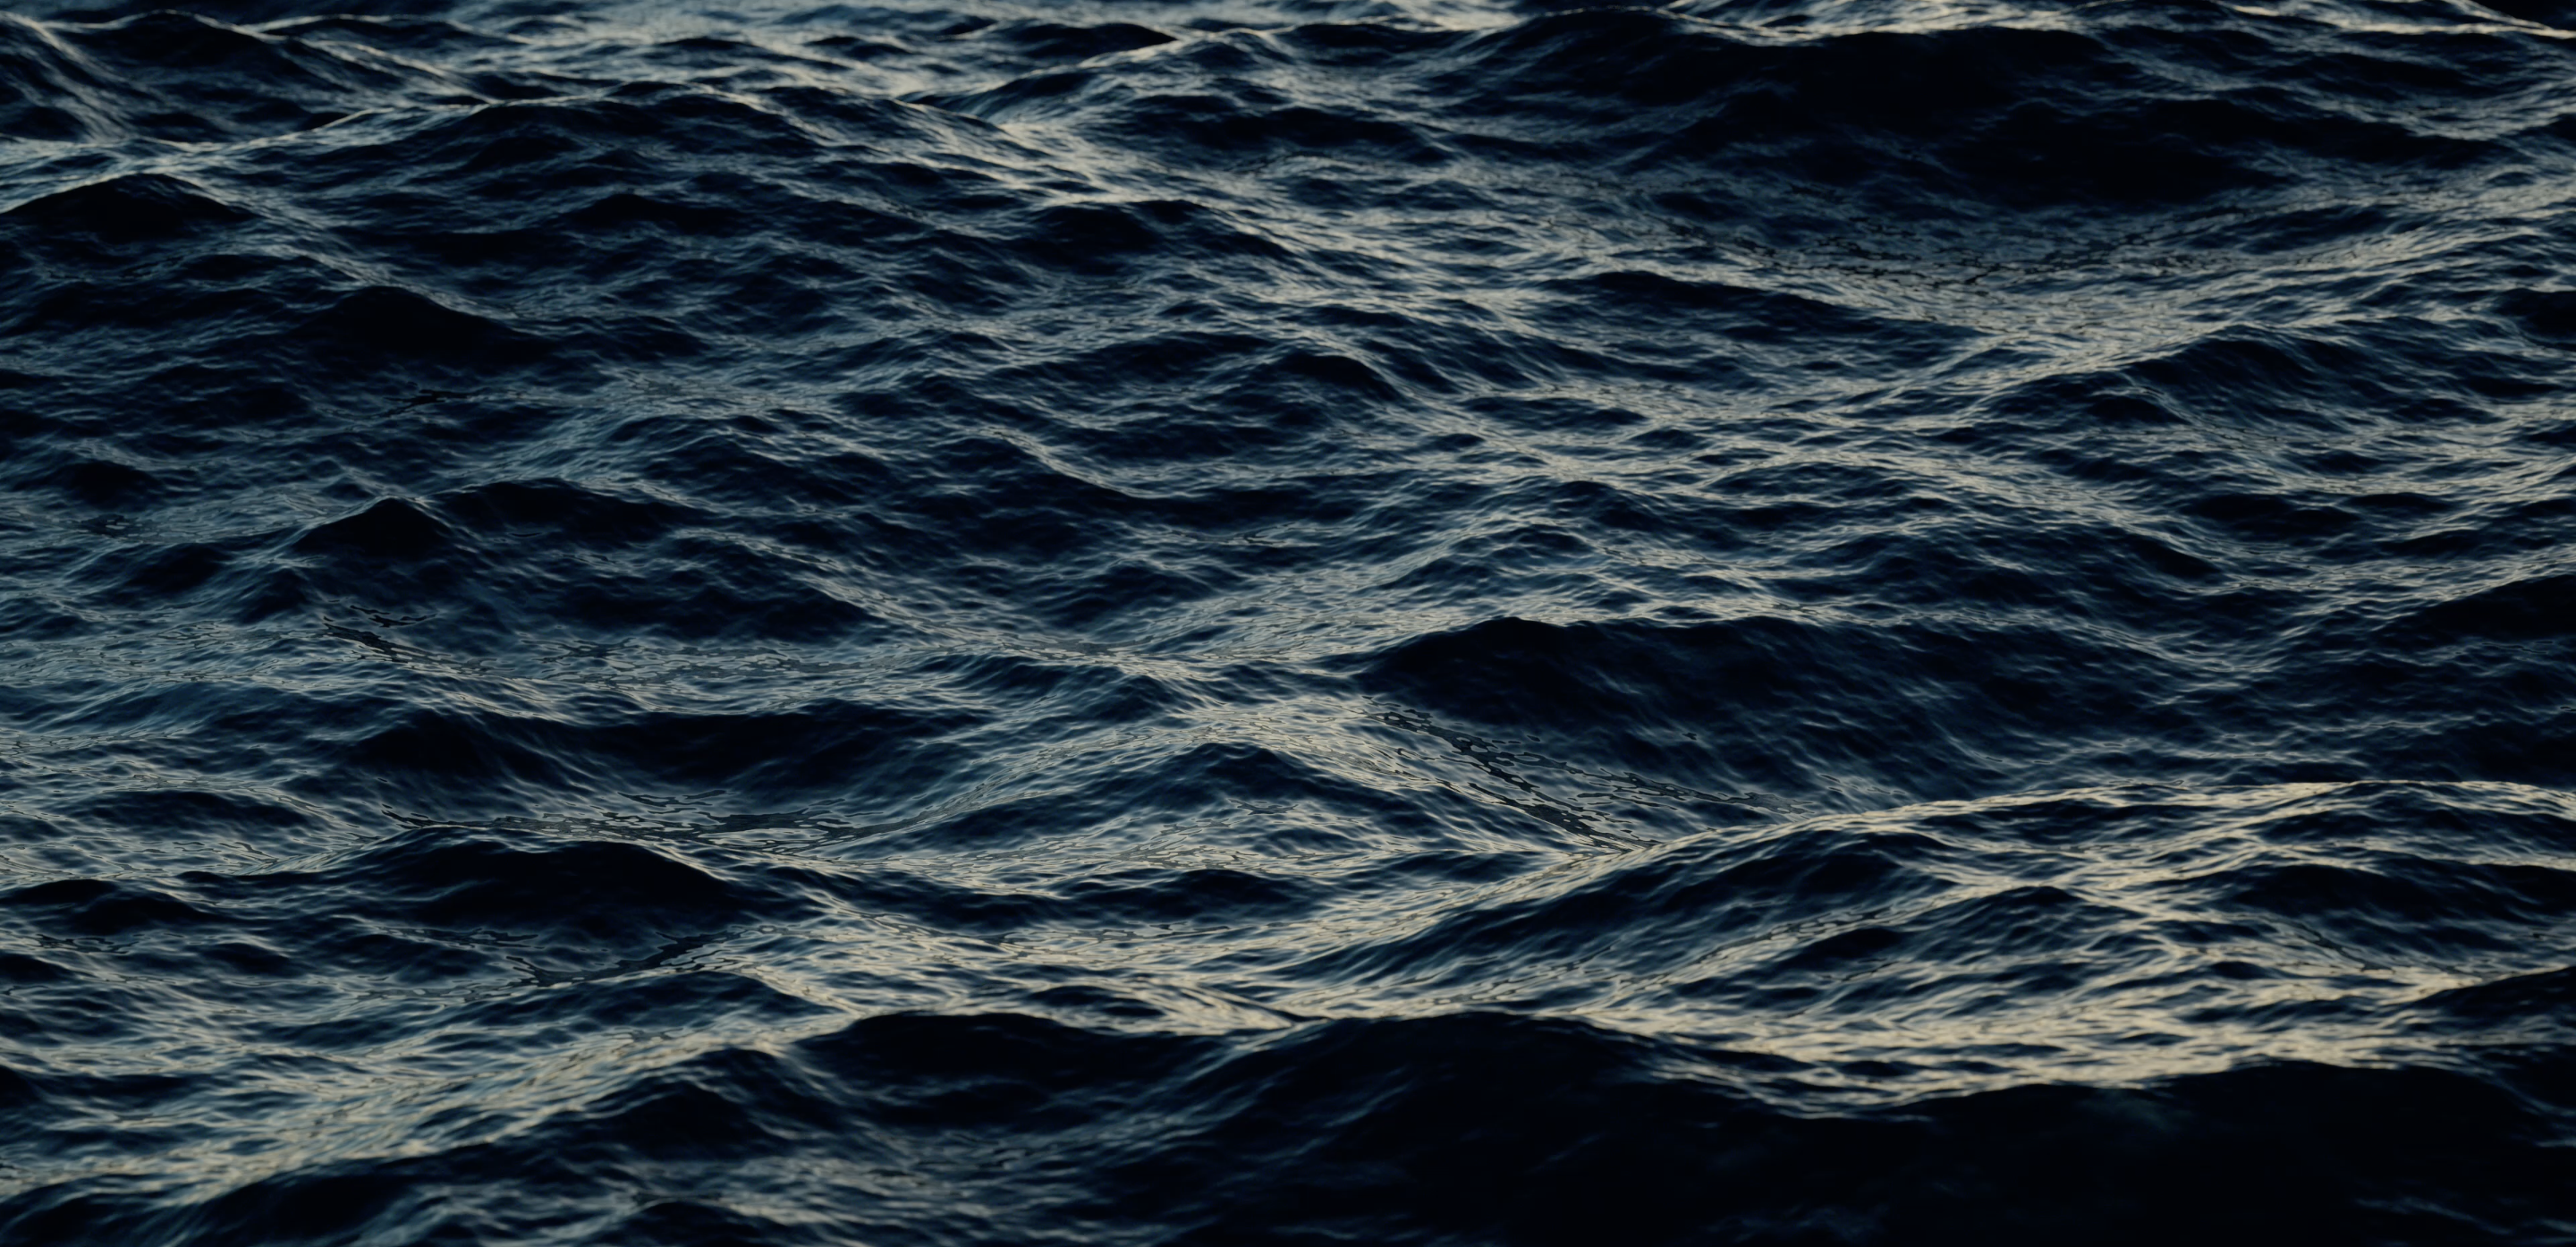 background image of waves